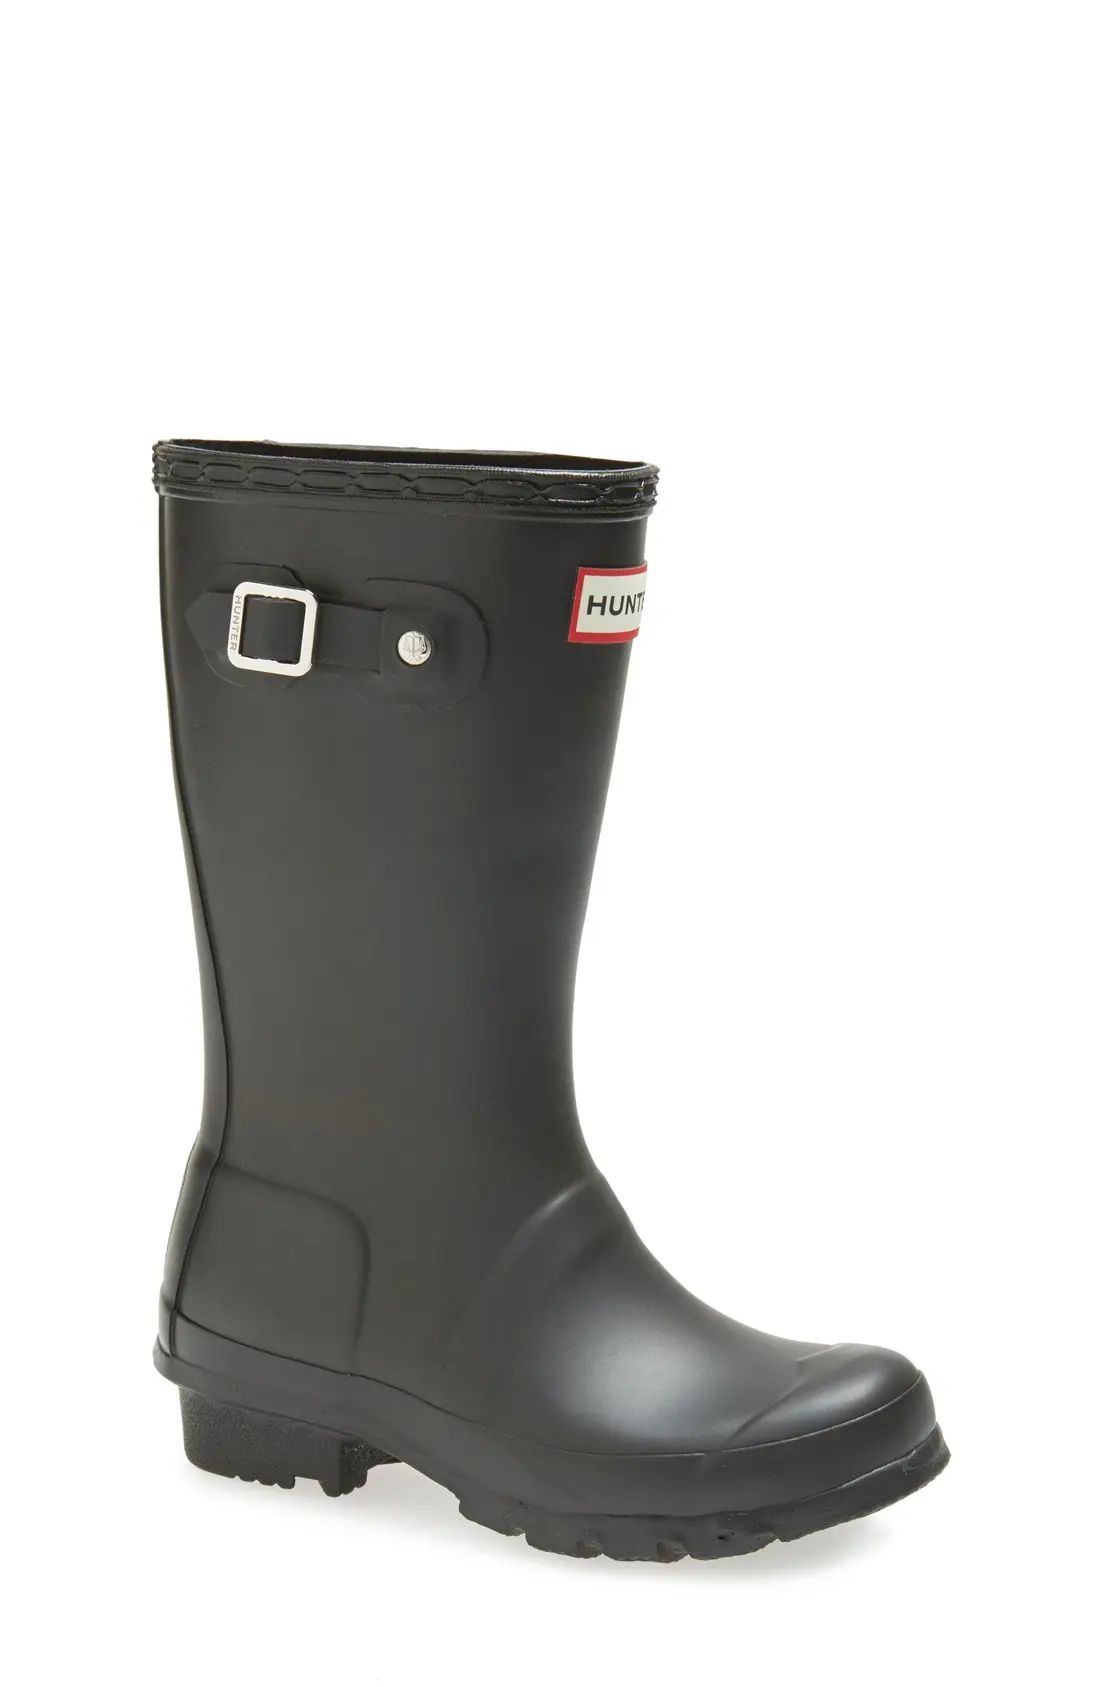 Toddler Hunter 'Original' Rain Boot, Size 1 M - Black | Nordstrom